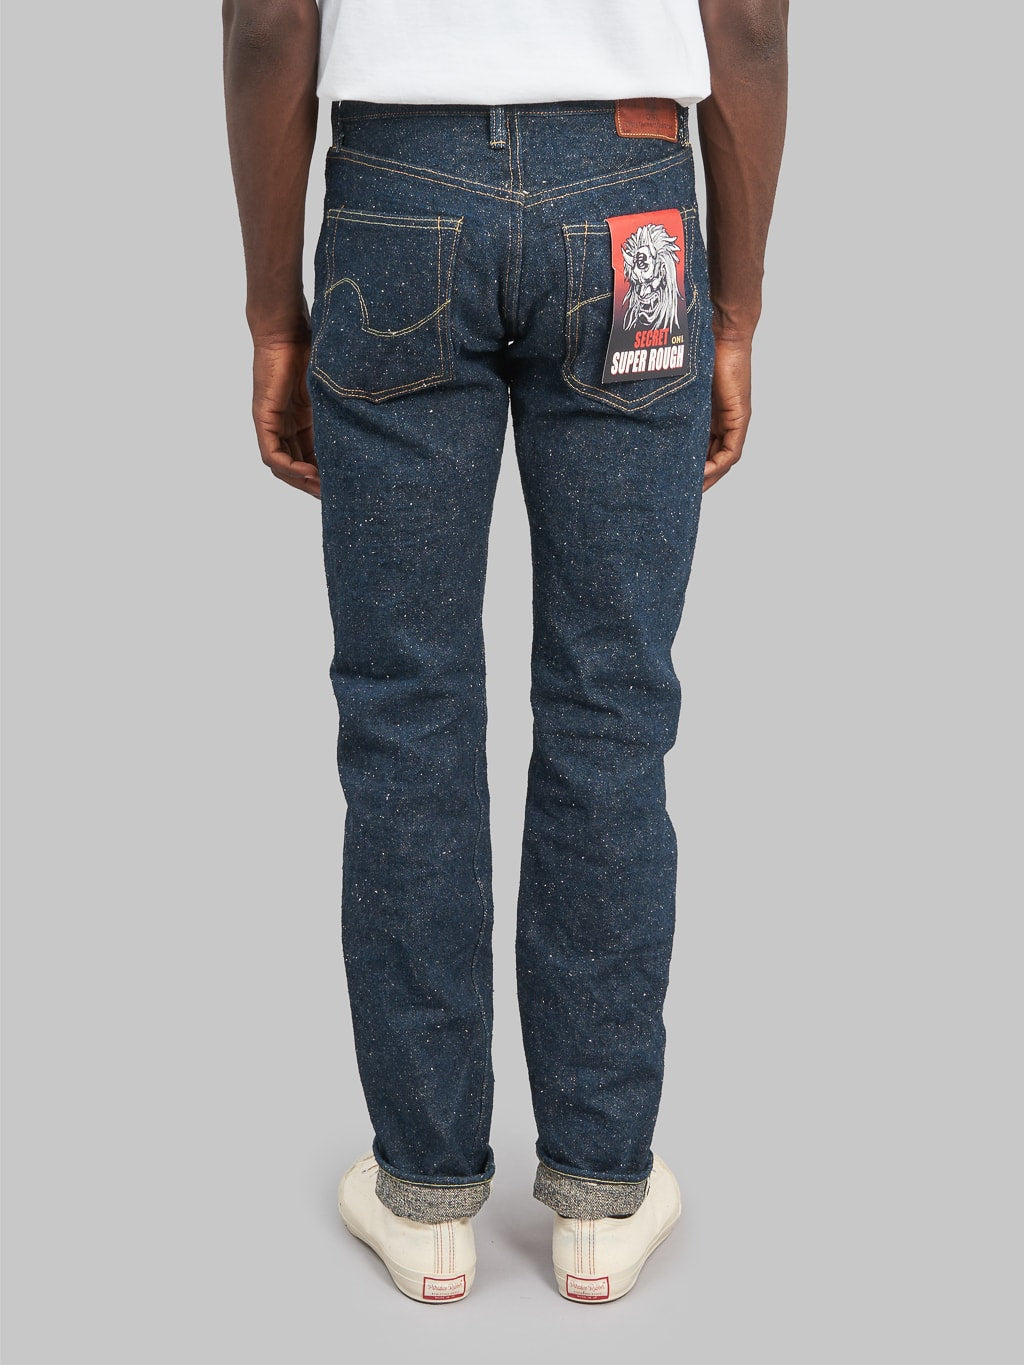 ONI Denim 246SESR Secret Super Rough Neat Straight selvedge Jeans back fit